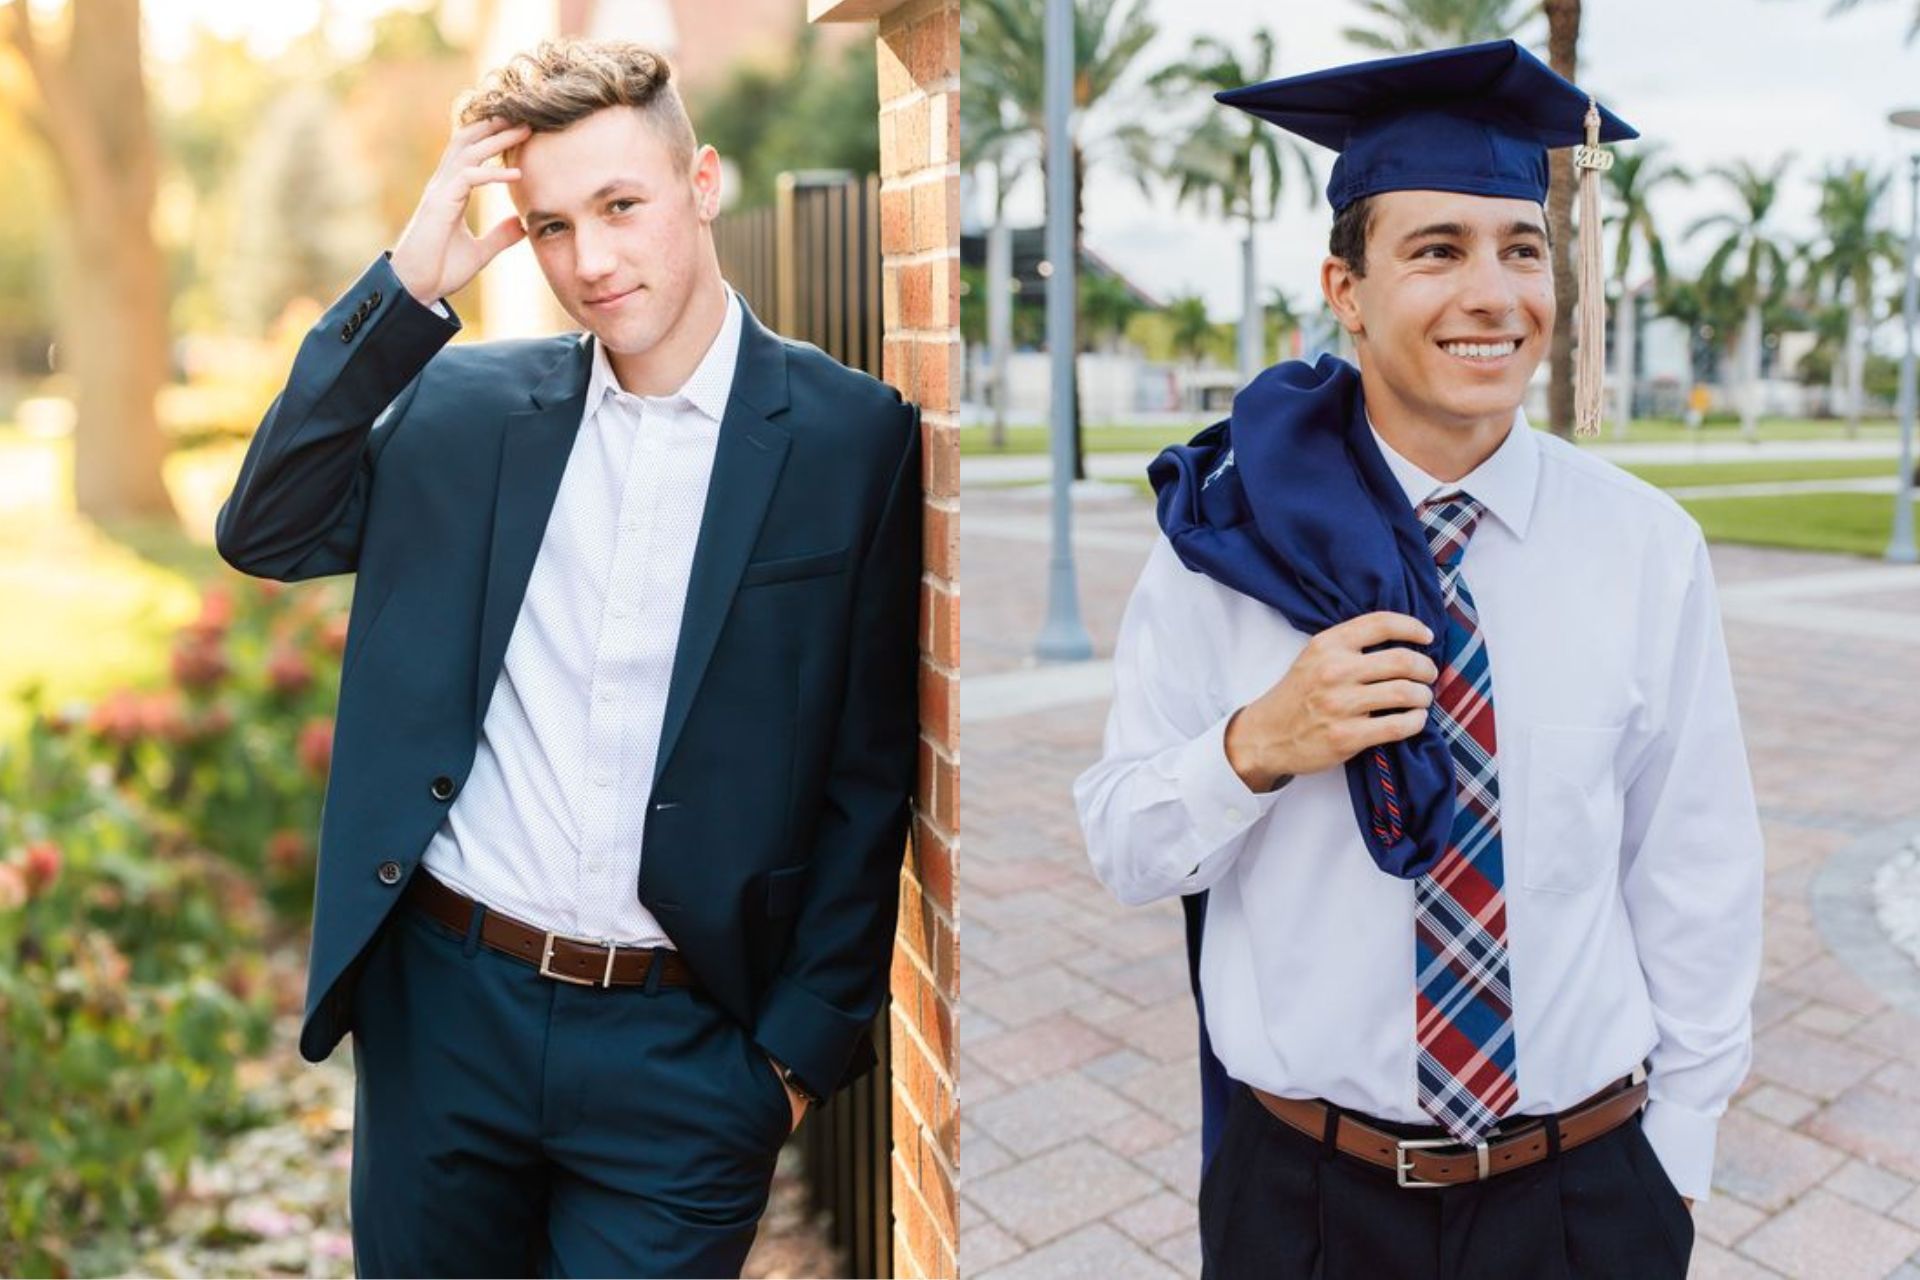 College Graduation outfit | Graduation outfit college, Outfits, Graduation  outfit